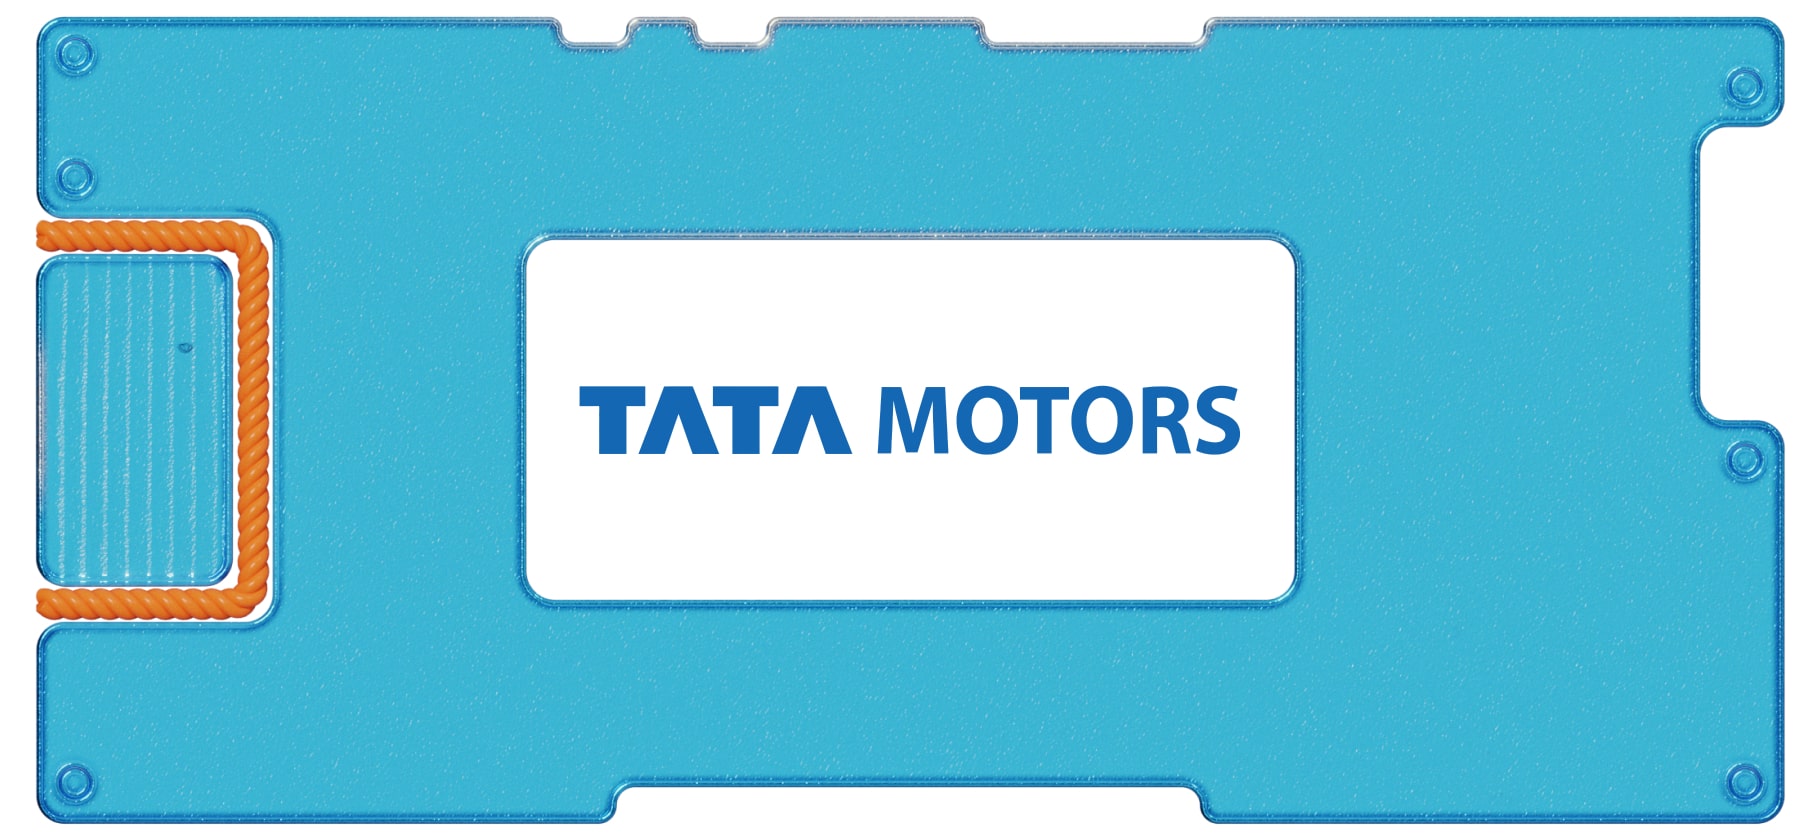 Обзор Tata Motors: электрокары, Индия и англичане